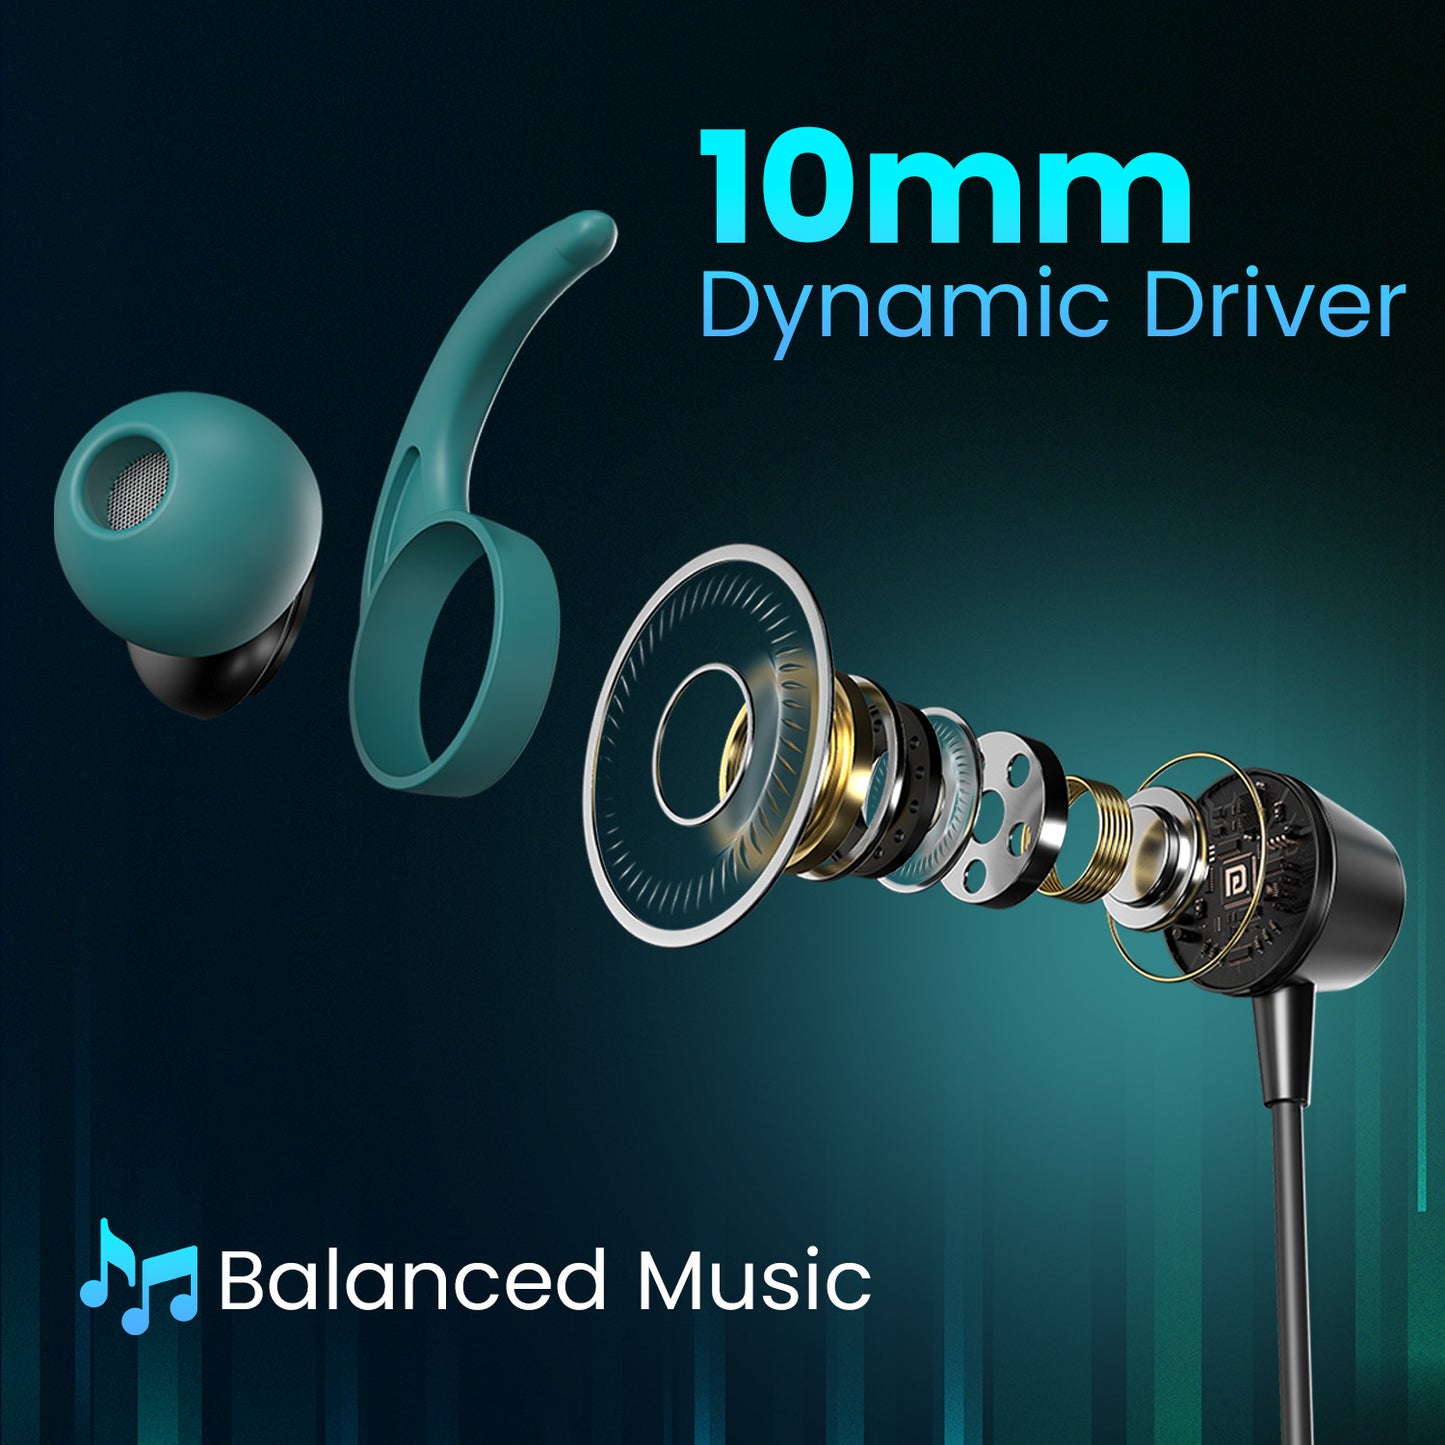 Green portronics neckband| Neckband bluetooth headphones harmonics x2 with 10mm dynamic driver